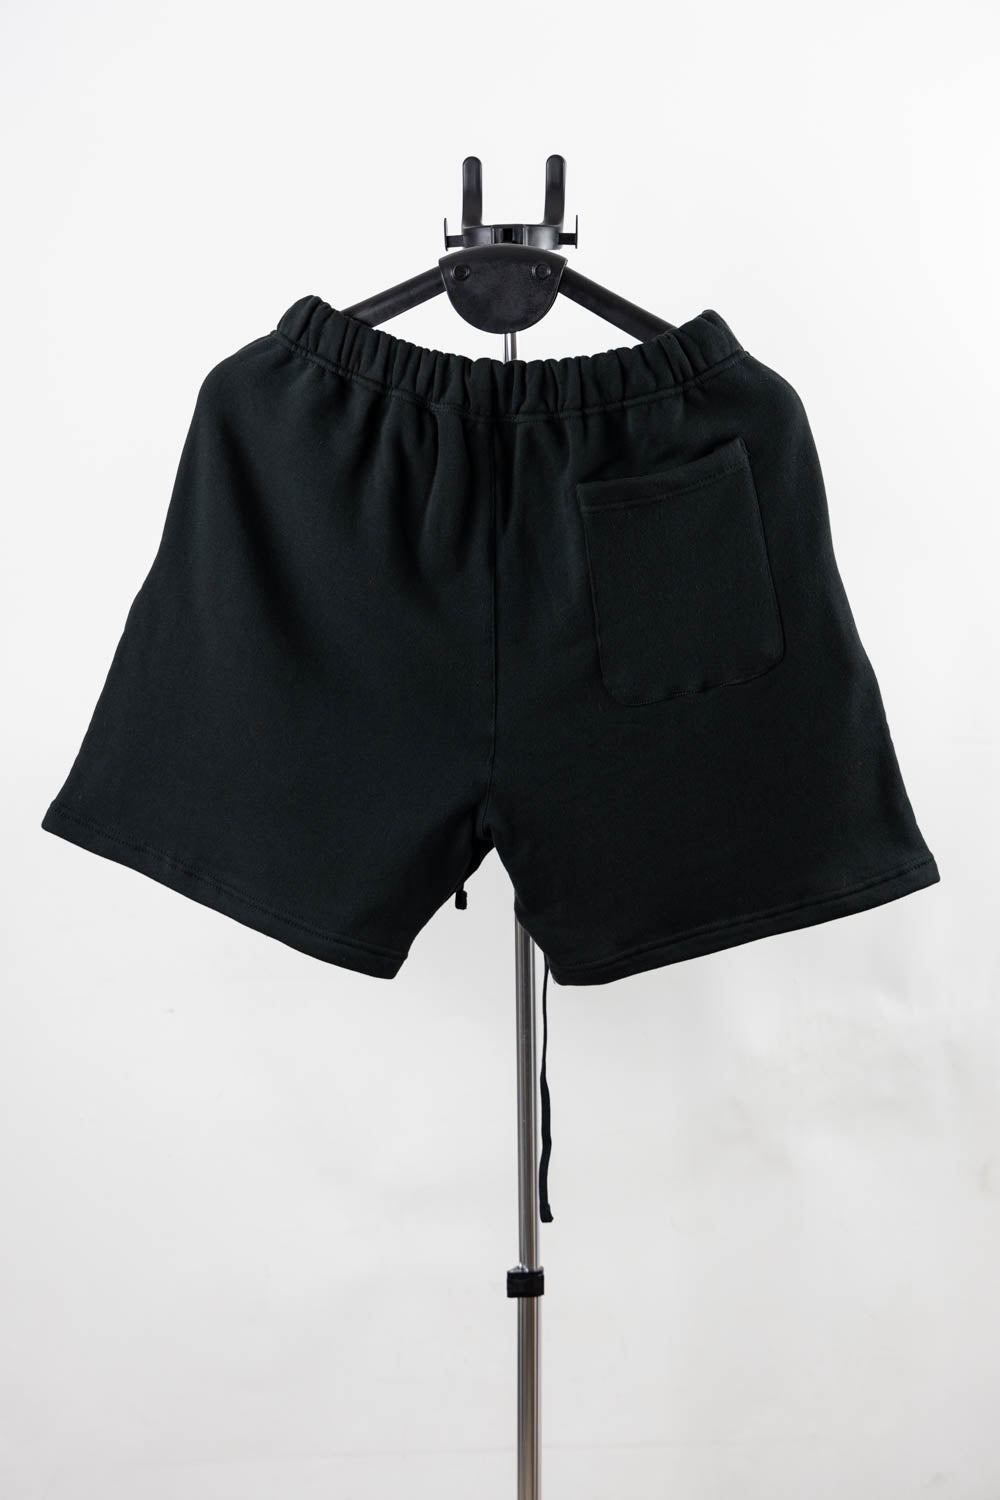 Fear of God Essentials Fleece Shorts 'Black'